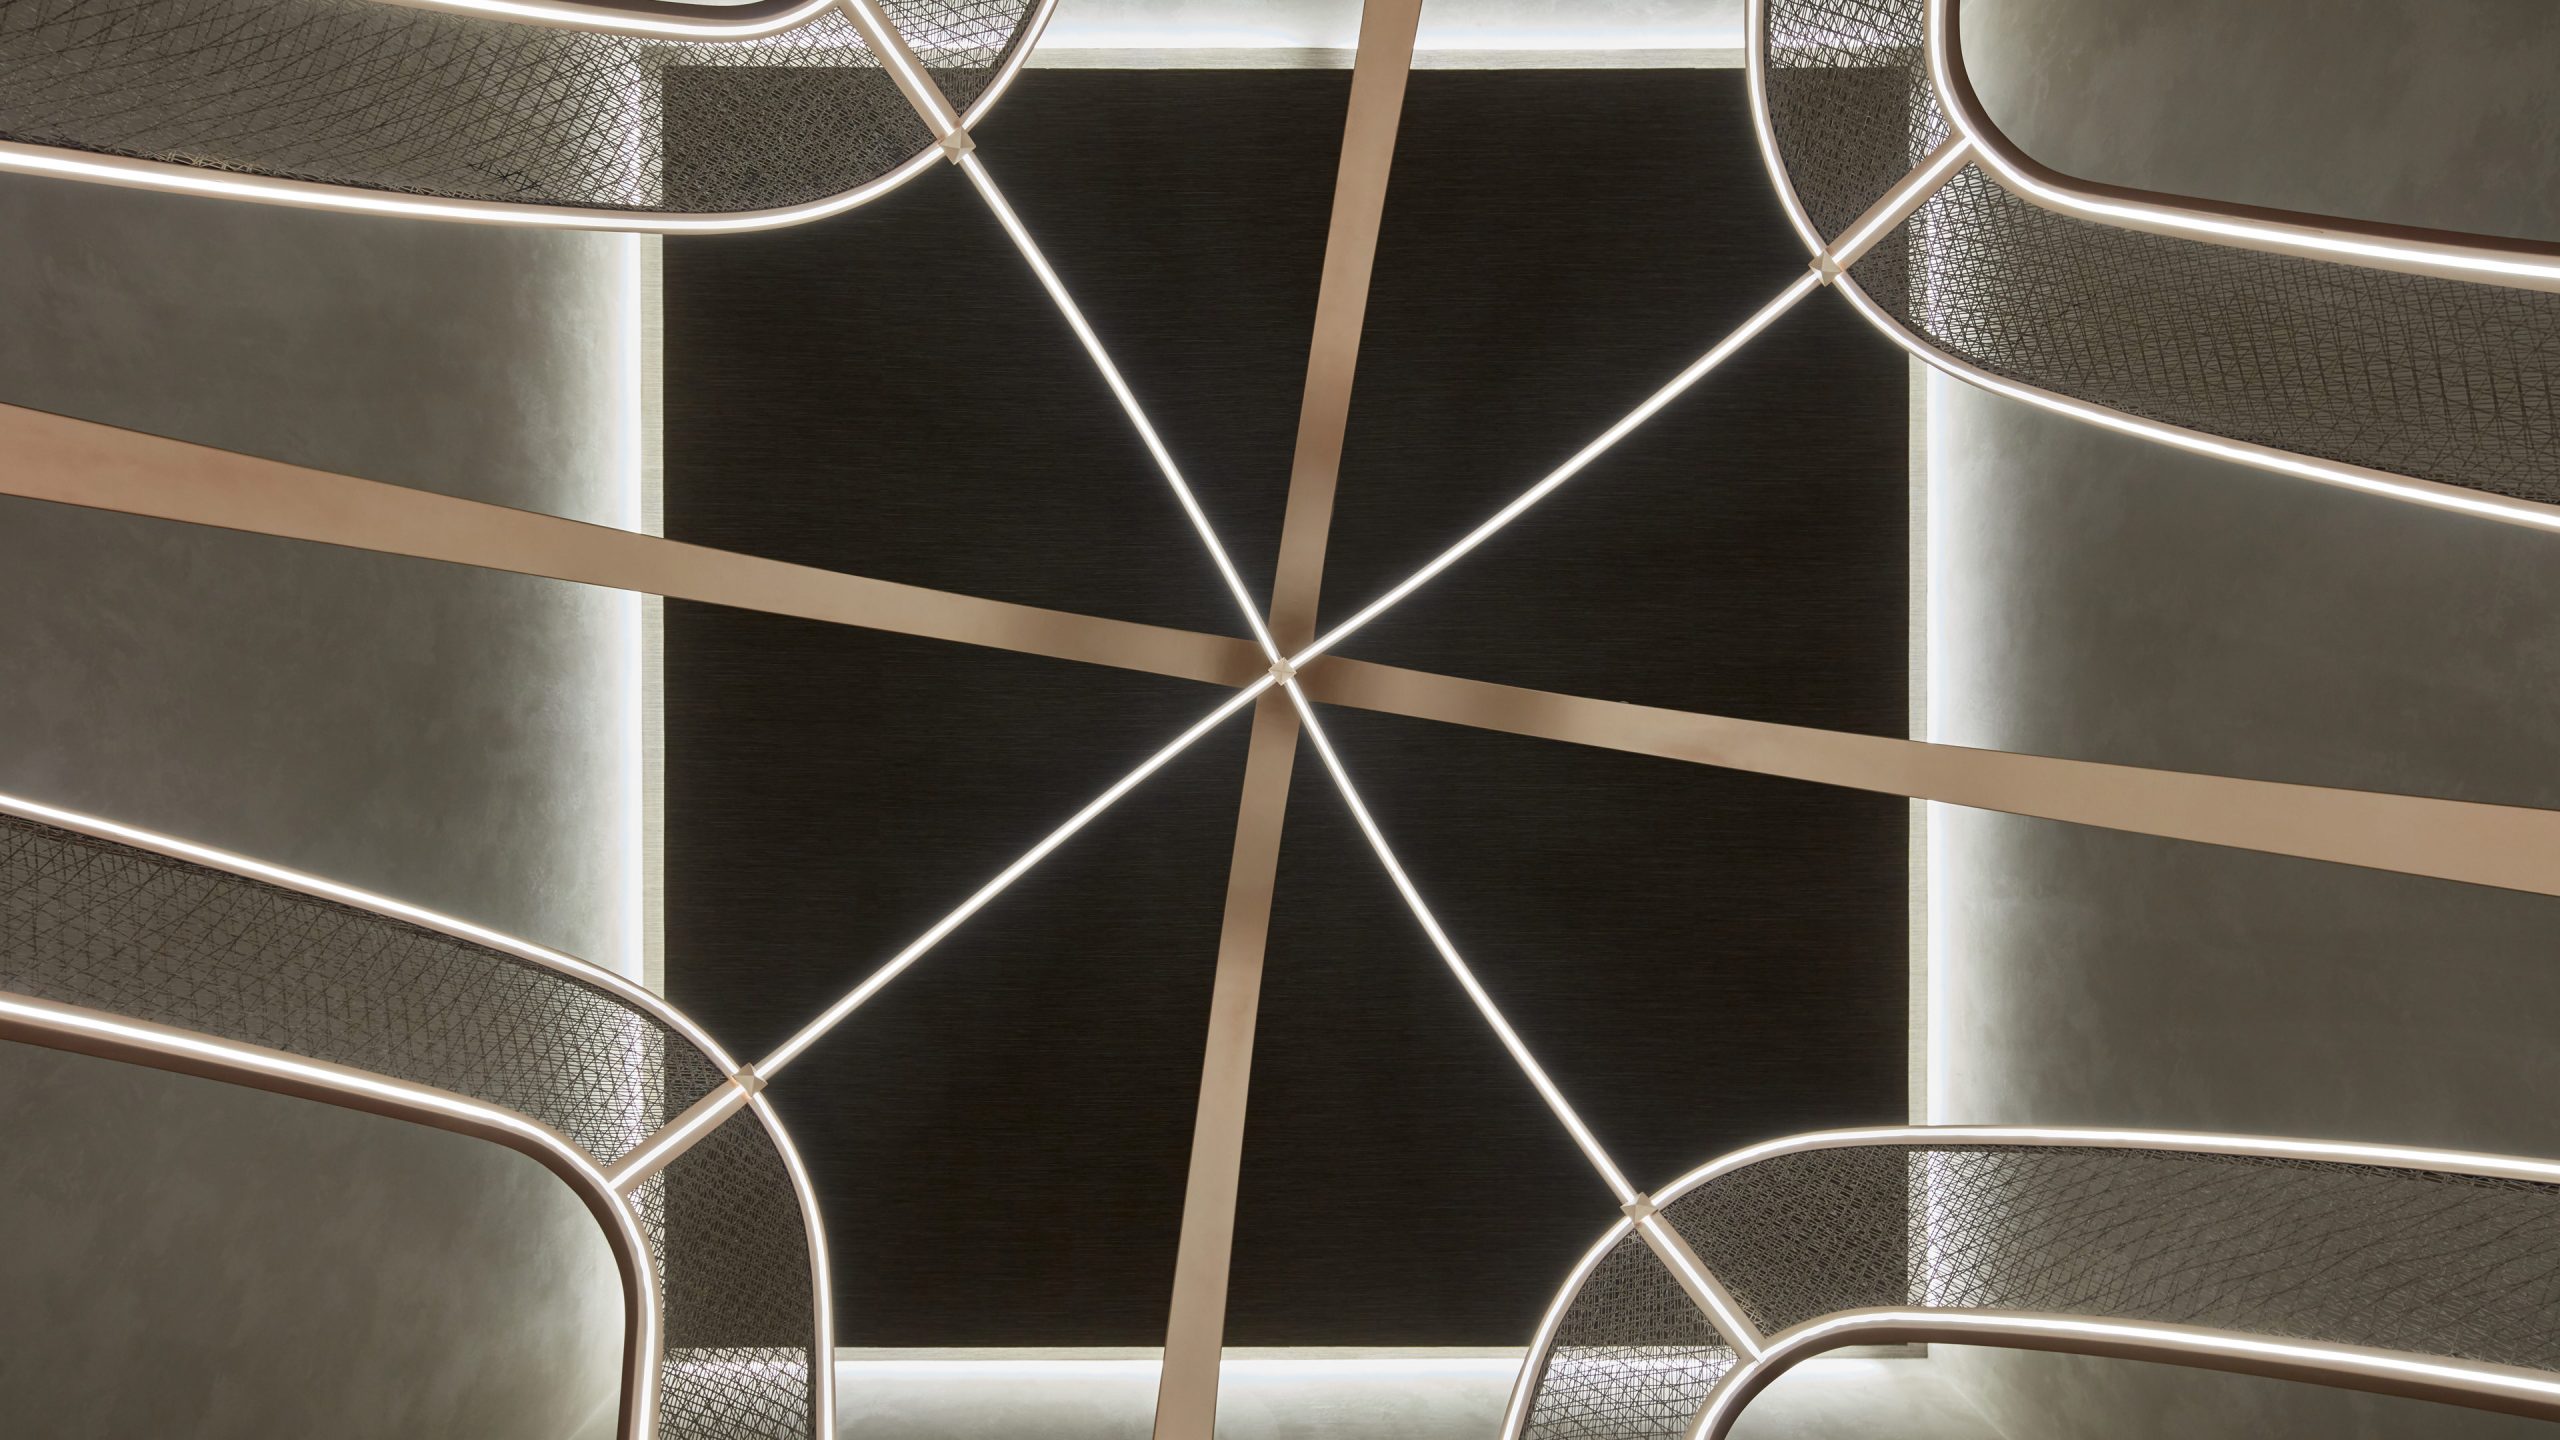 Architectural Lighting Design Luxury Spa Illuminated Feature Arches Ceiling Cove Dubai Studio N